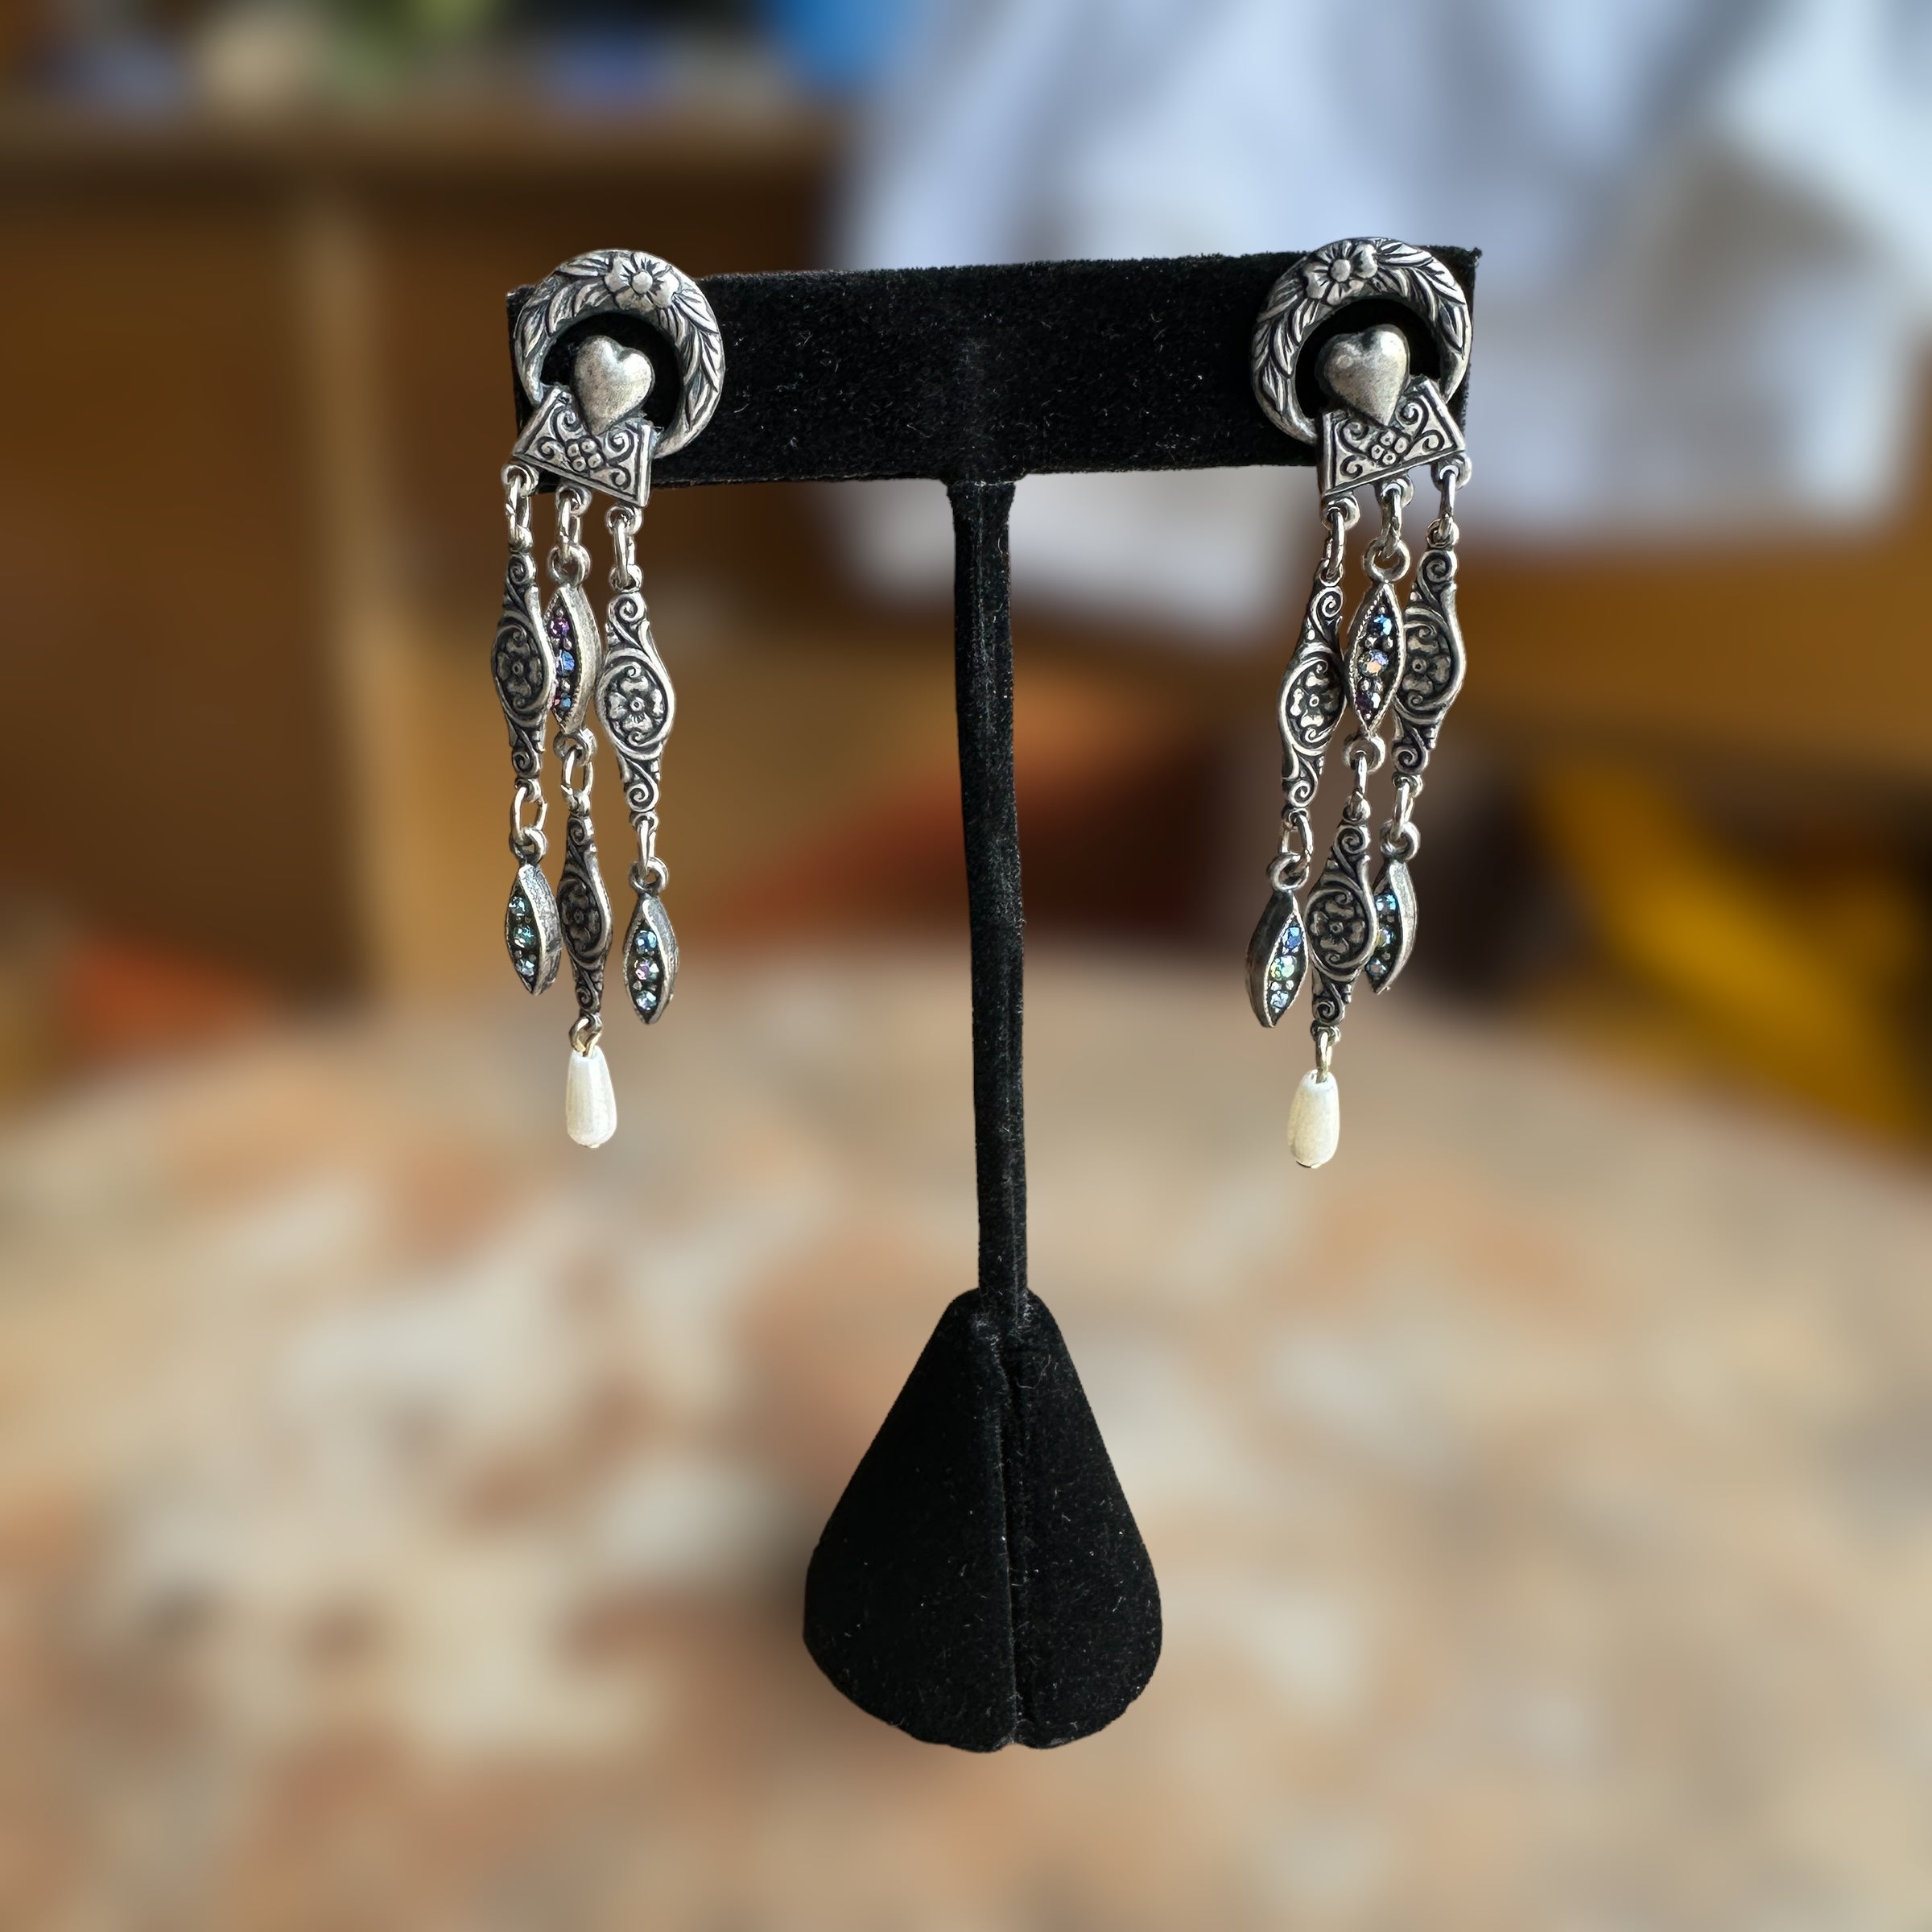 Super cute vintage silver-tone dangle earrings with faux pearl drop